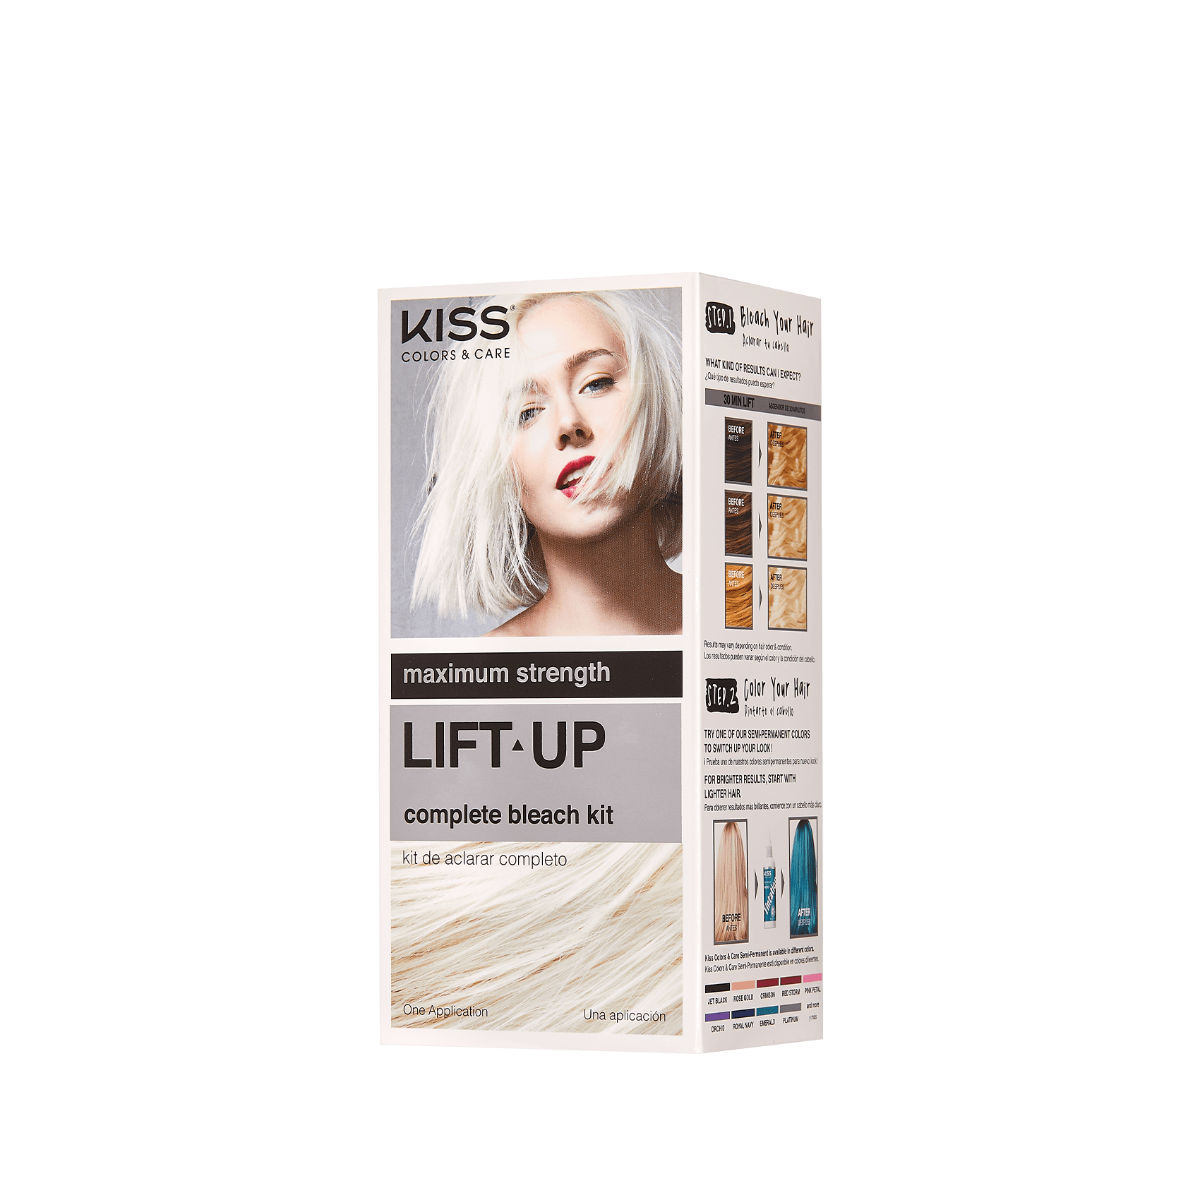 Kiss Lift Up Complete Bleach Kit